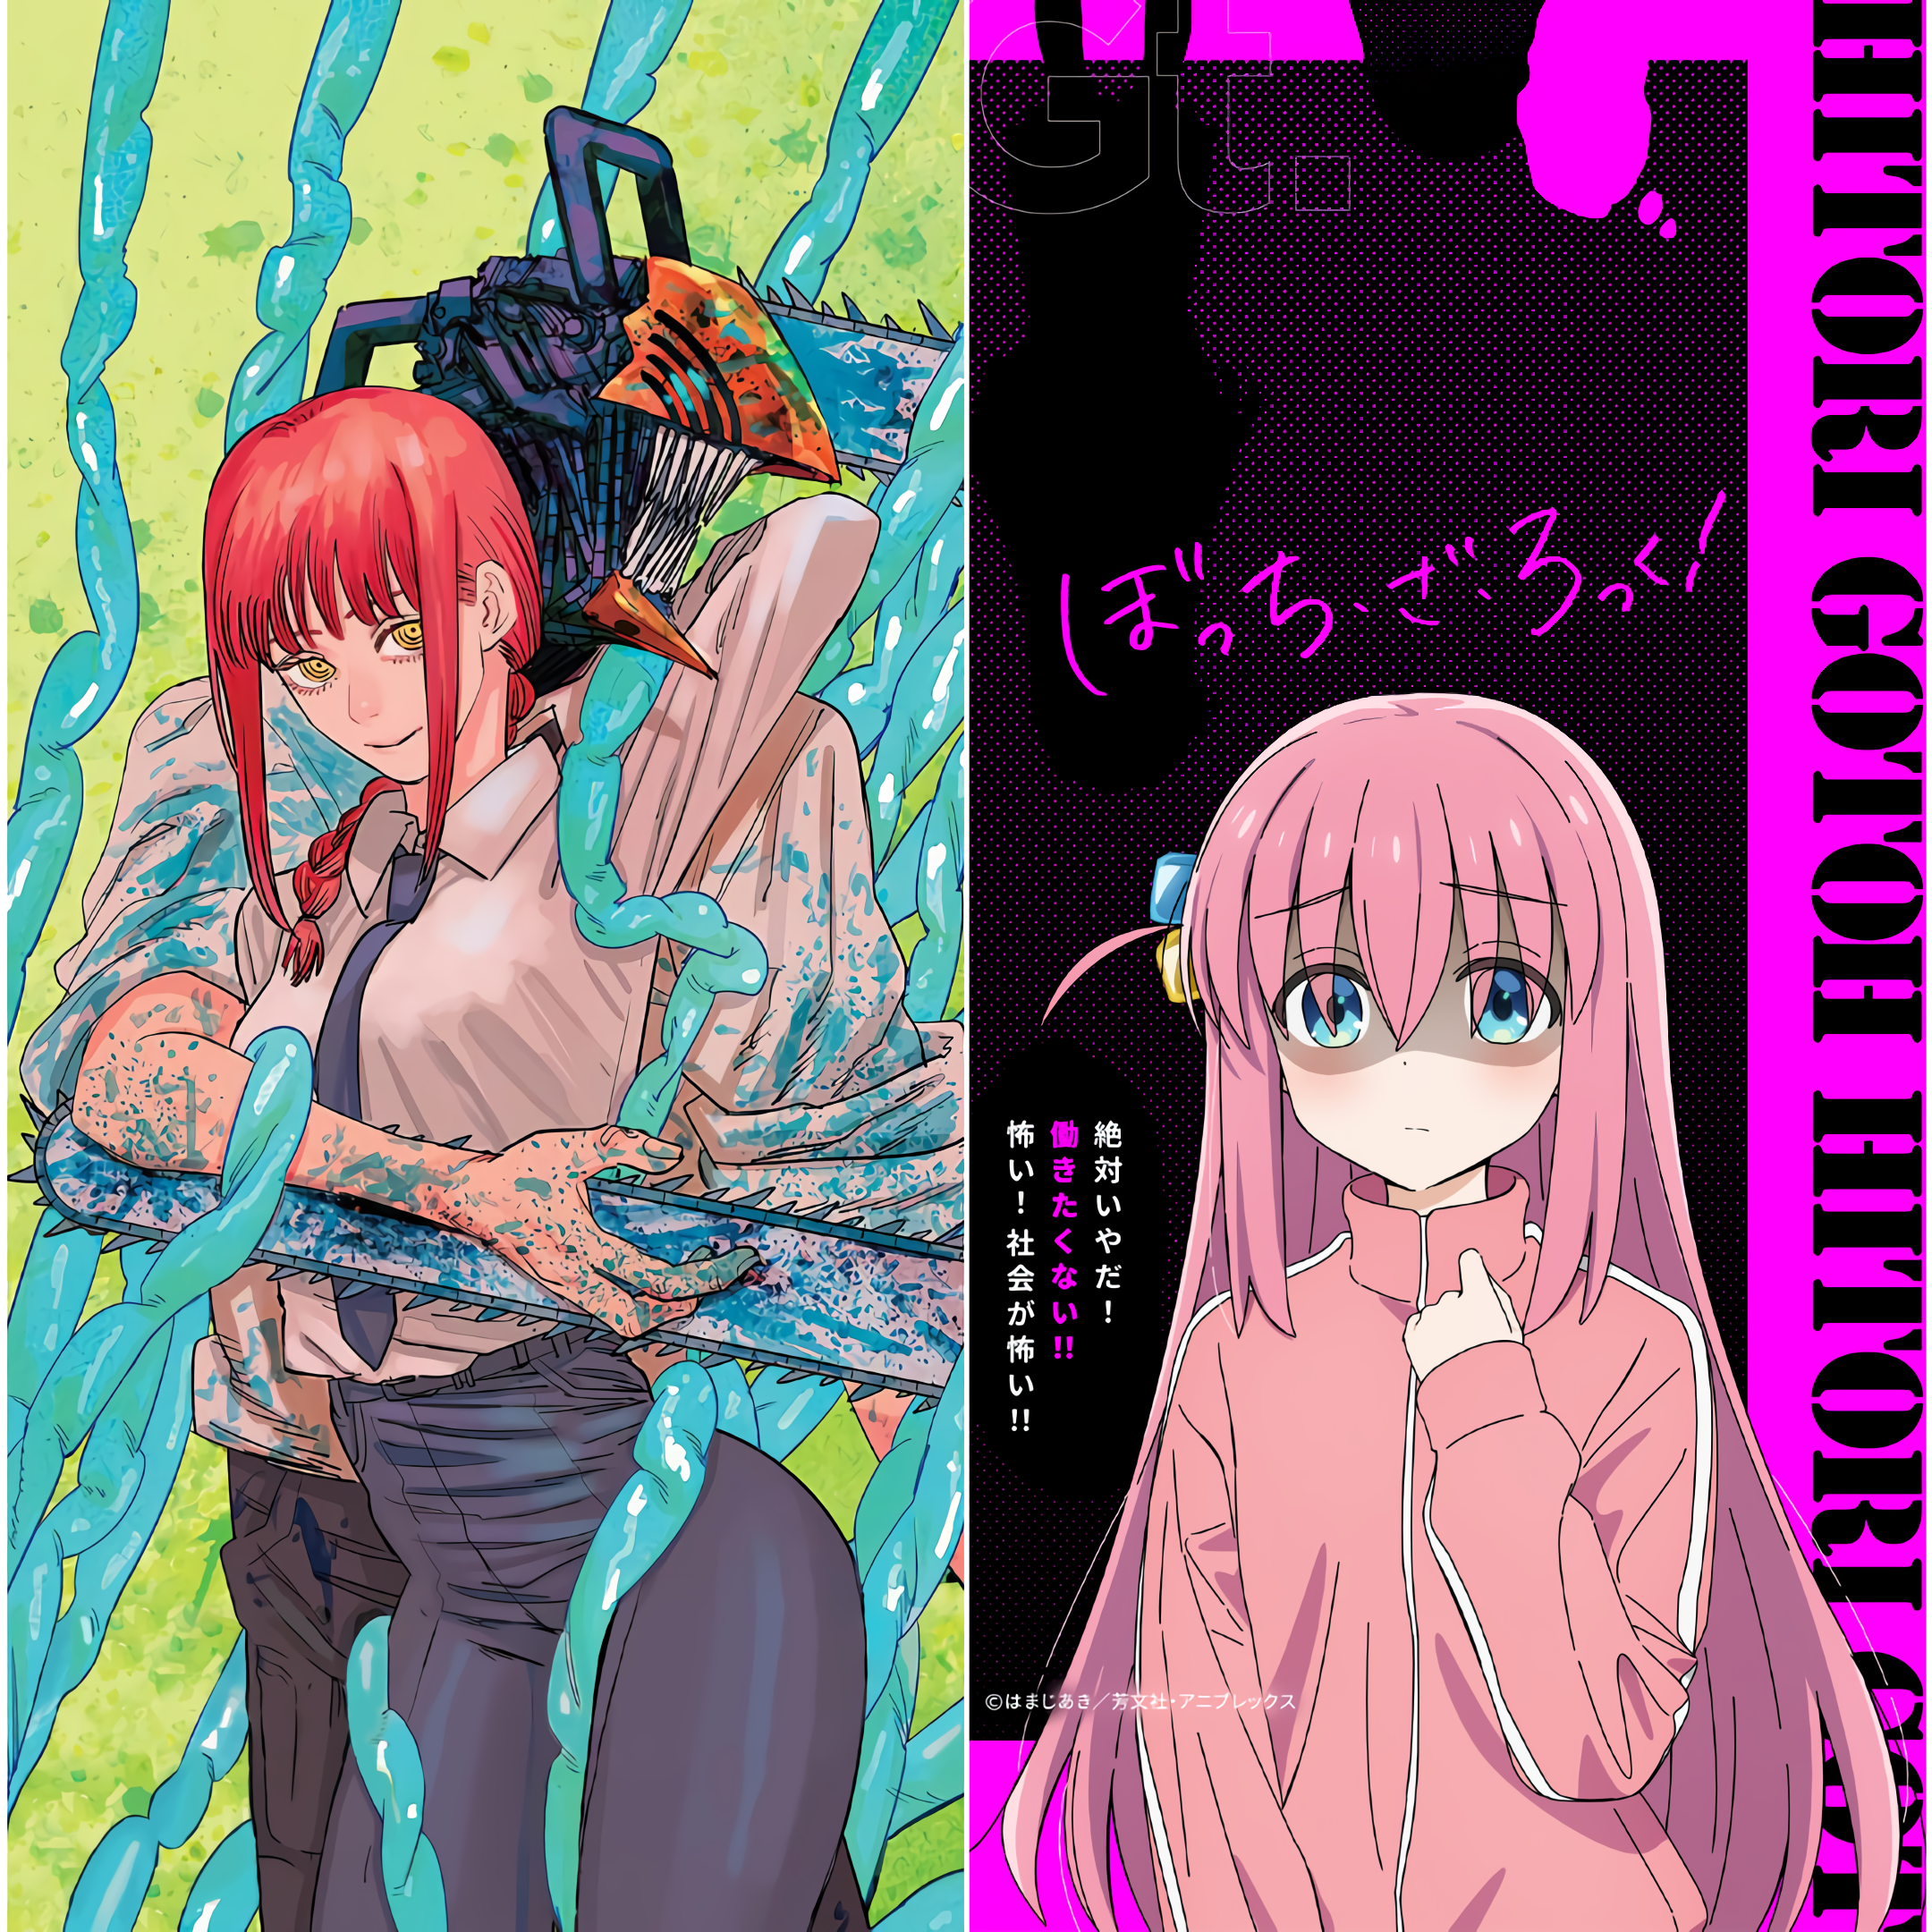 Mushoku Tensei Light Novel Officially Ends With Volume 26 – Yūjin Clothing